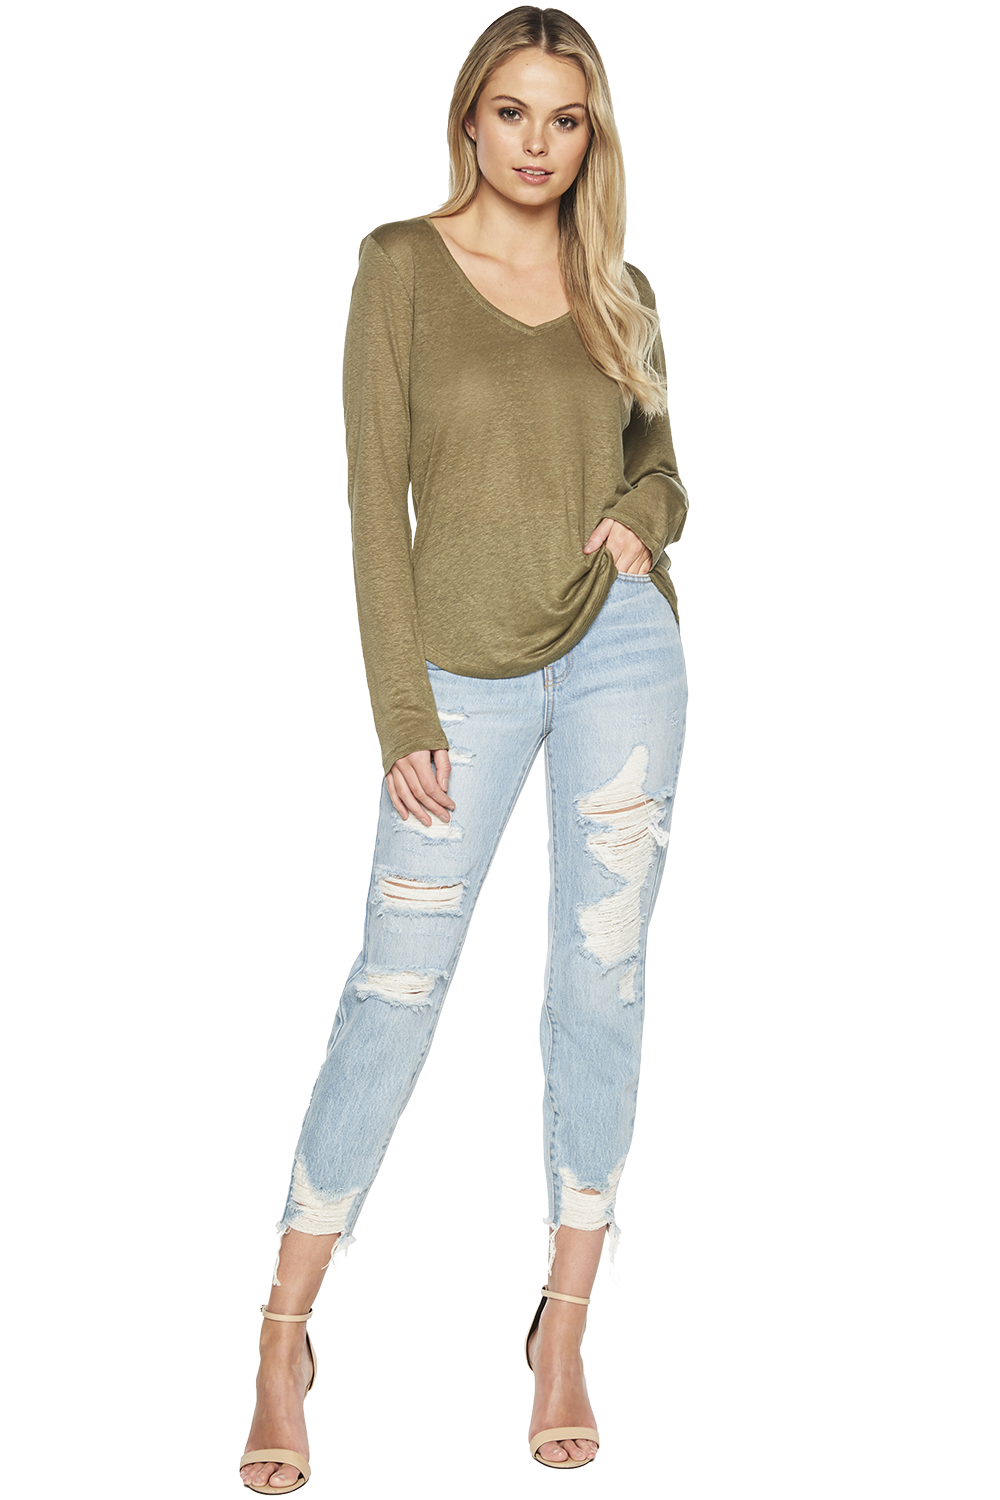 Charlotte Long Sleeve Top in Army Green | Bardot